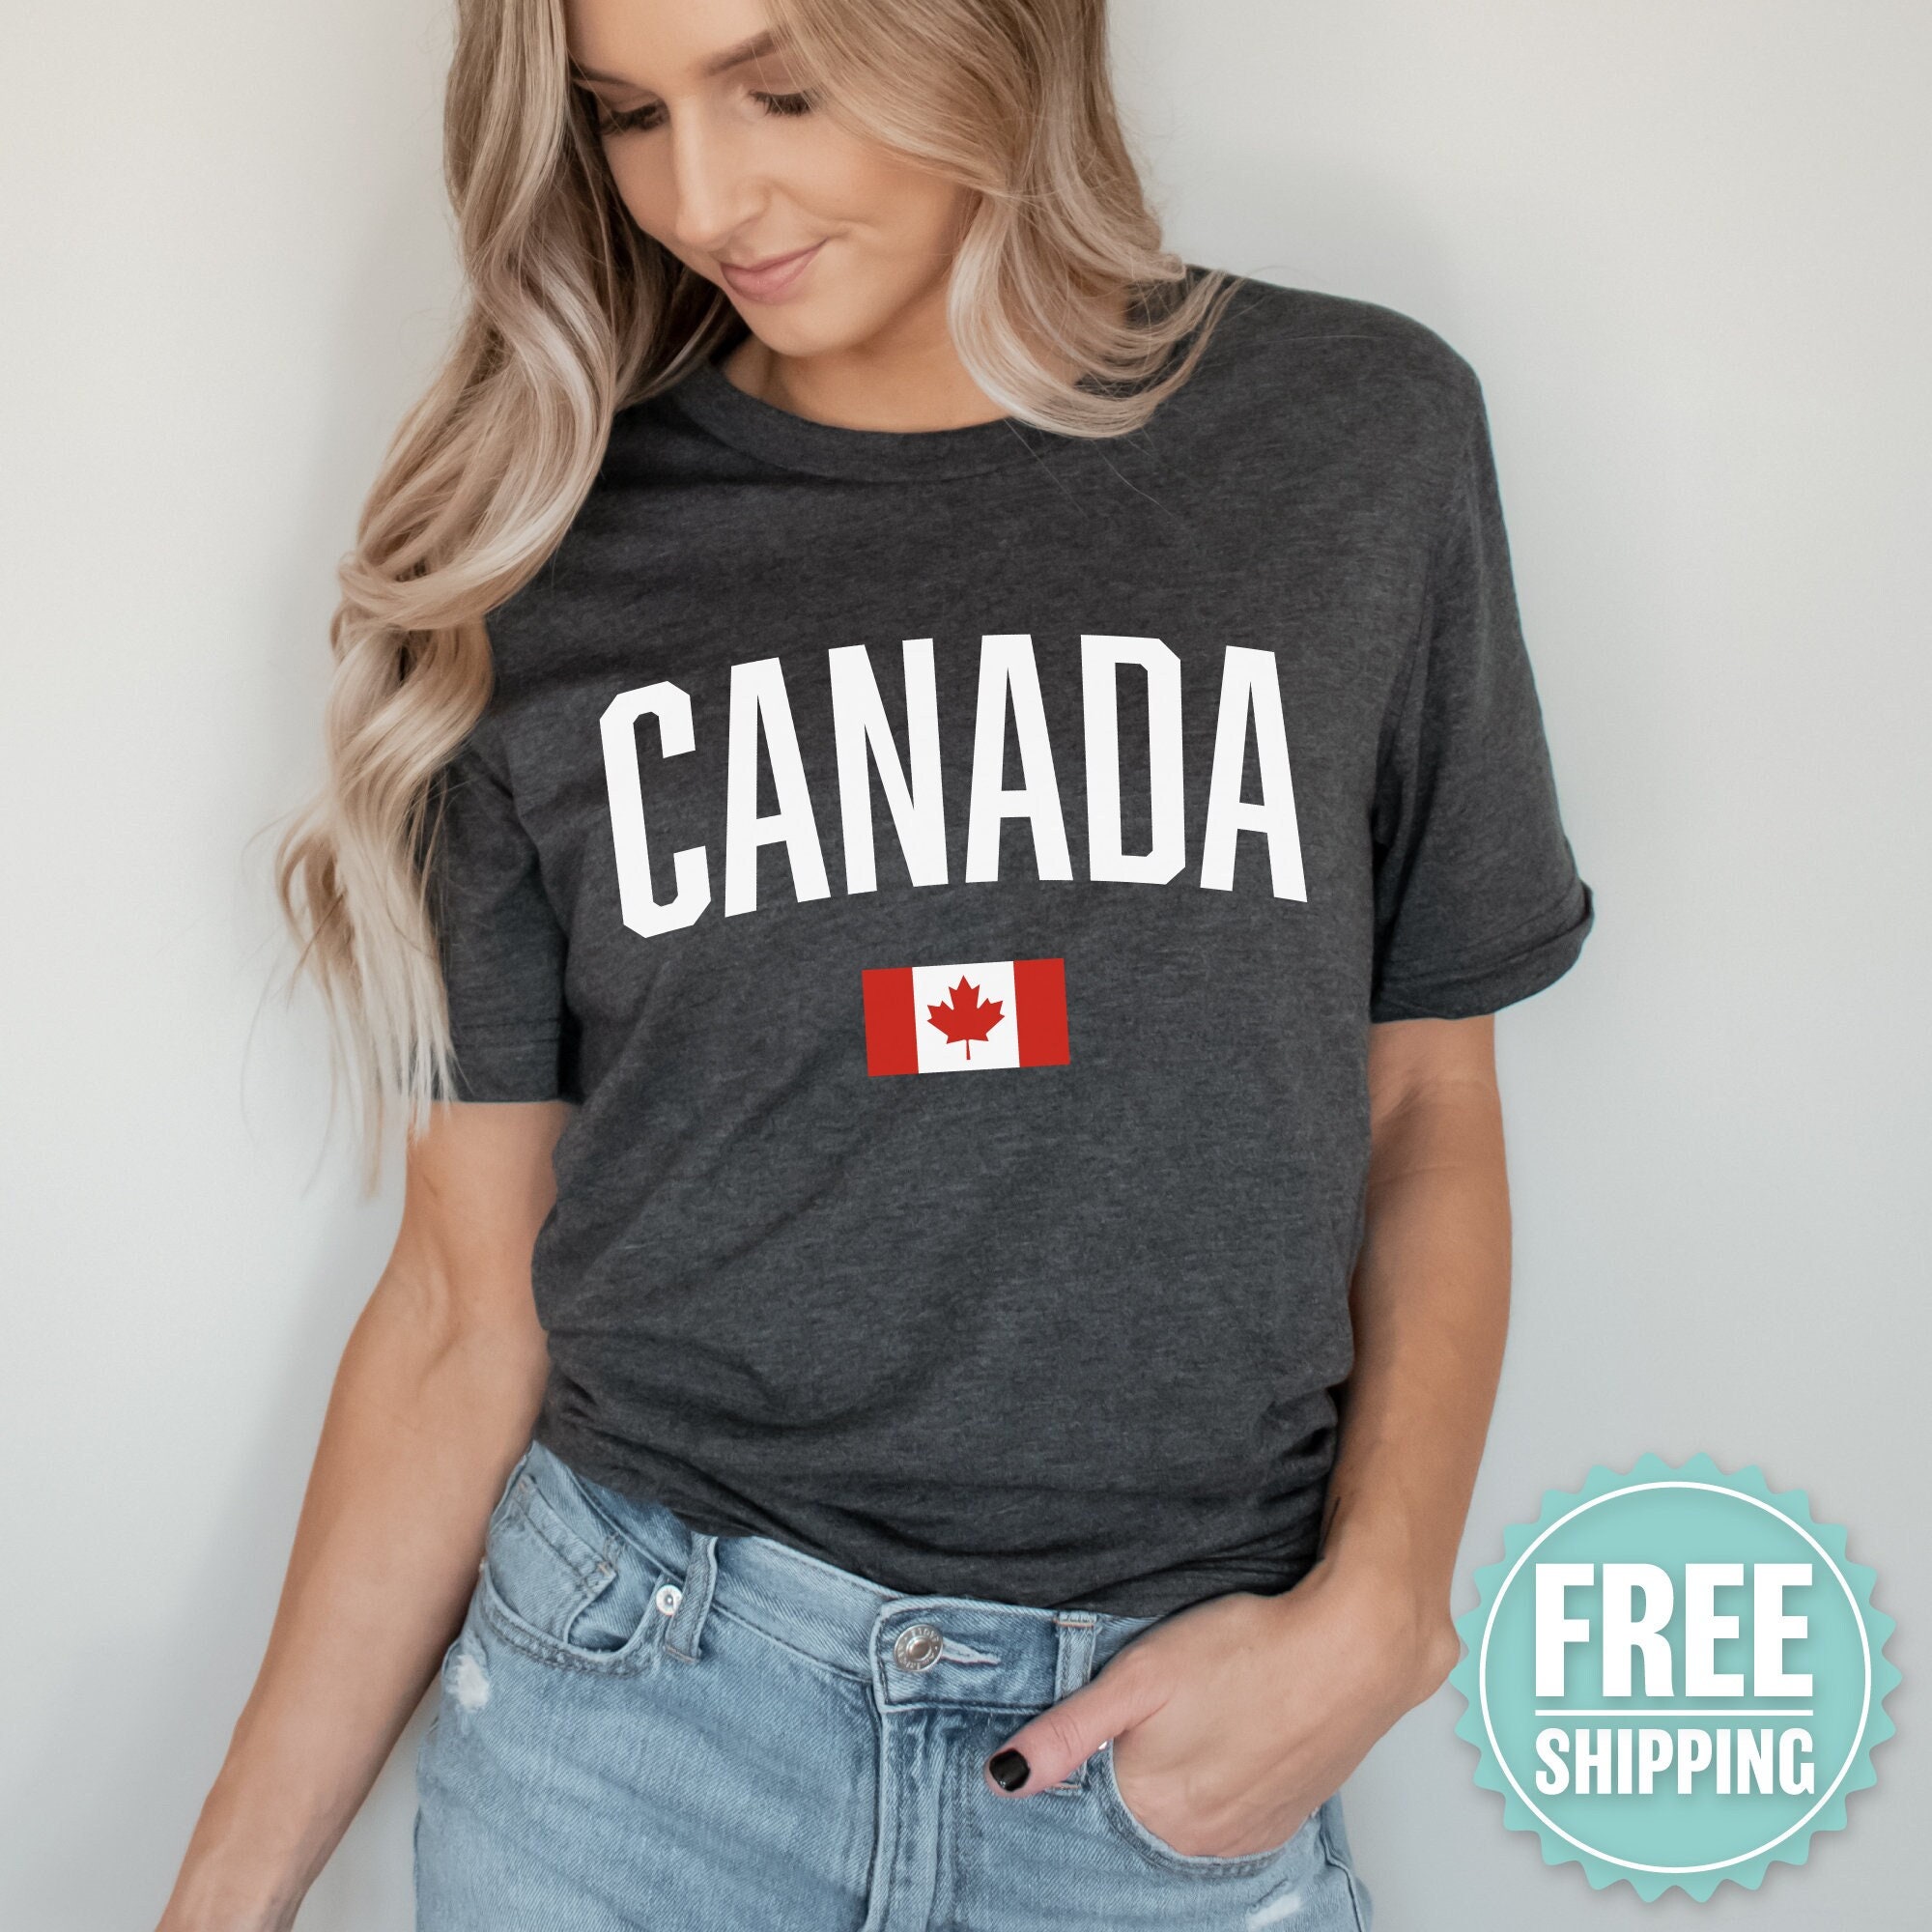 AHVIUGD Vintage Retro Canadian Maple Leaf Shirt Canada Flag T-Shirt 